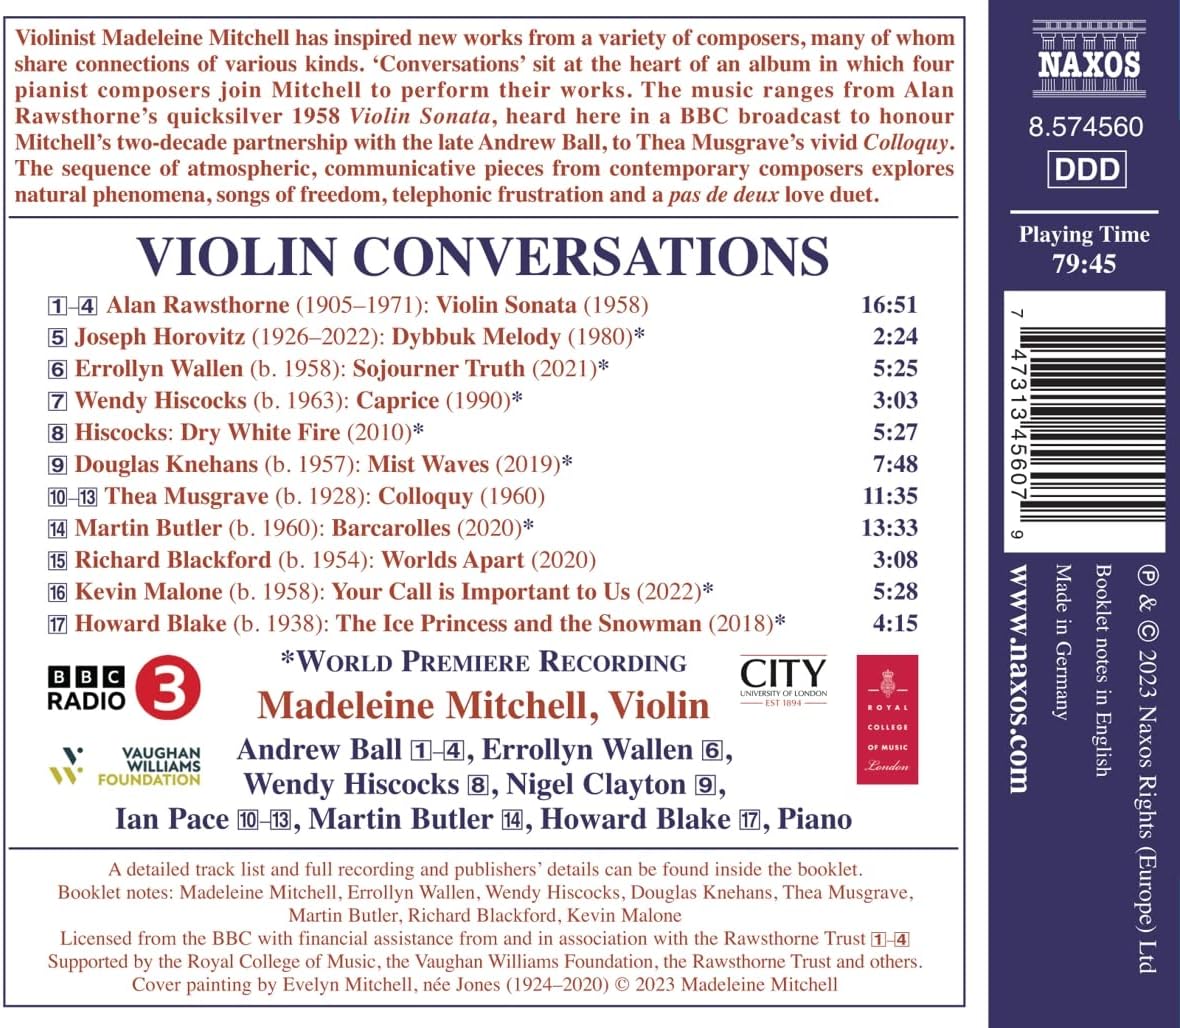 Madeleine Mitchell 바이올린과의 대화들 - 현대 영국 작곡가들의 바이올린 소나타 작품집 (Violin Conversations)